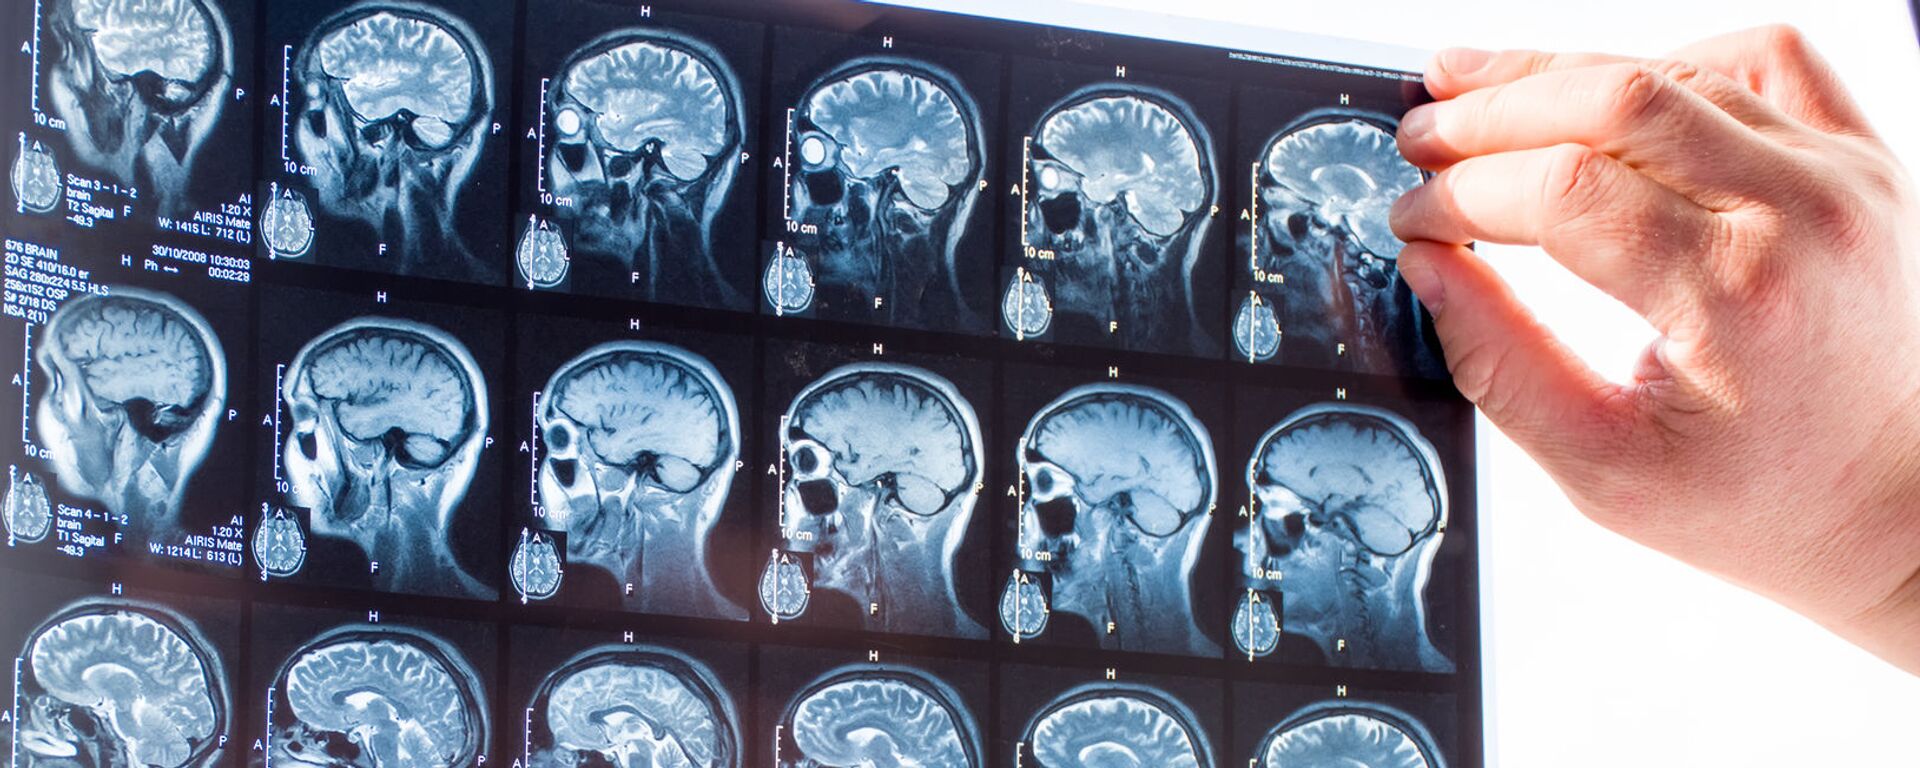 Smegenų tomografija - Sputnik Lietuva, 1920, 06.11.2021